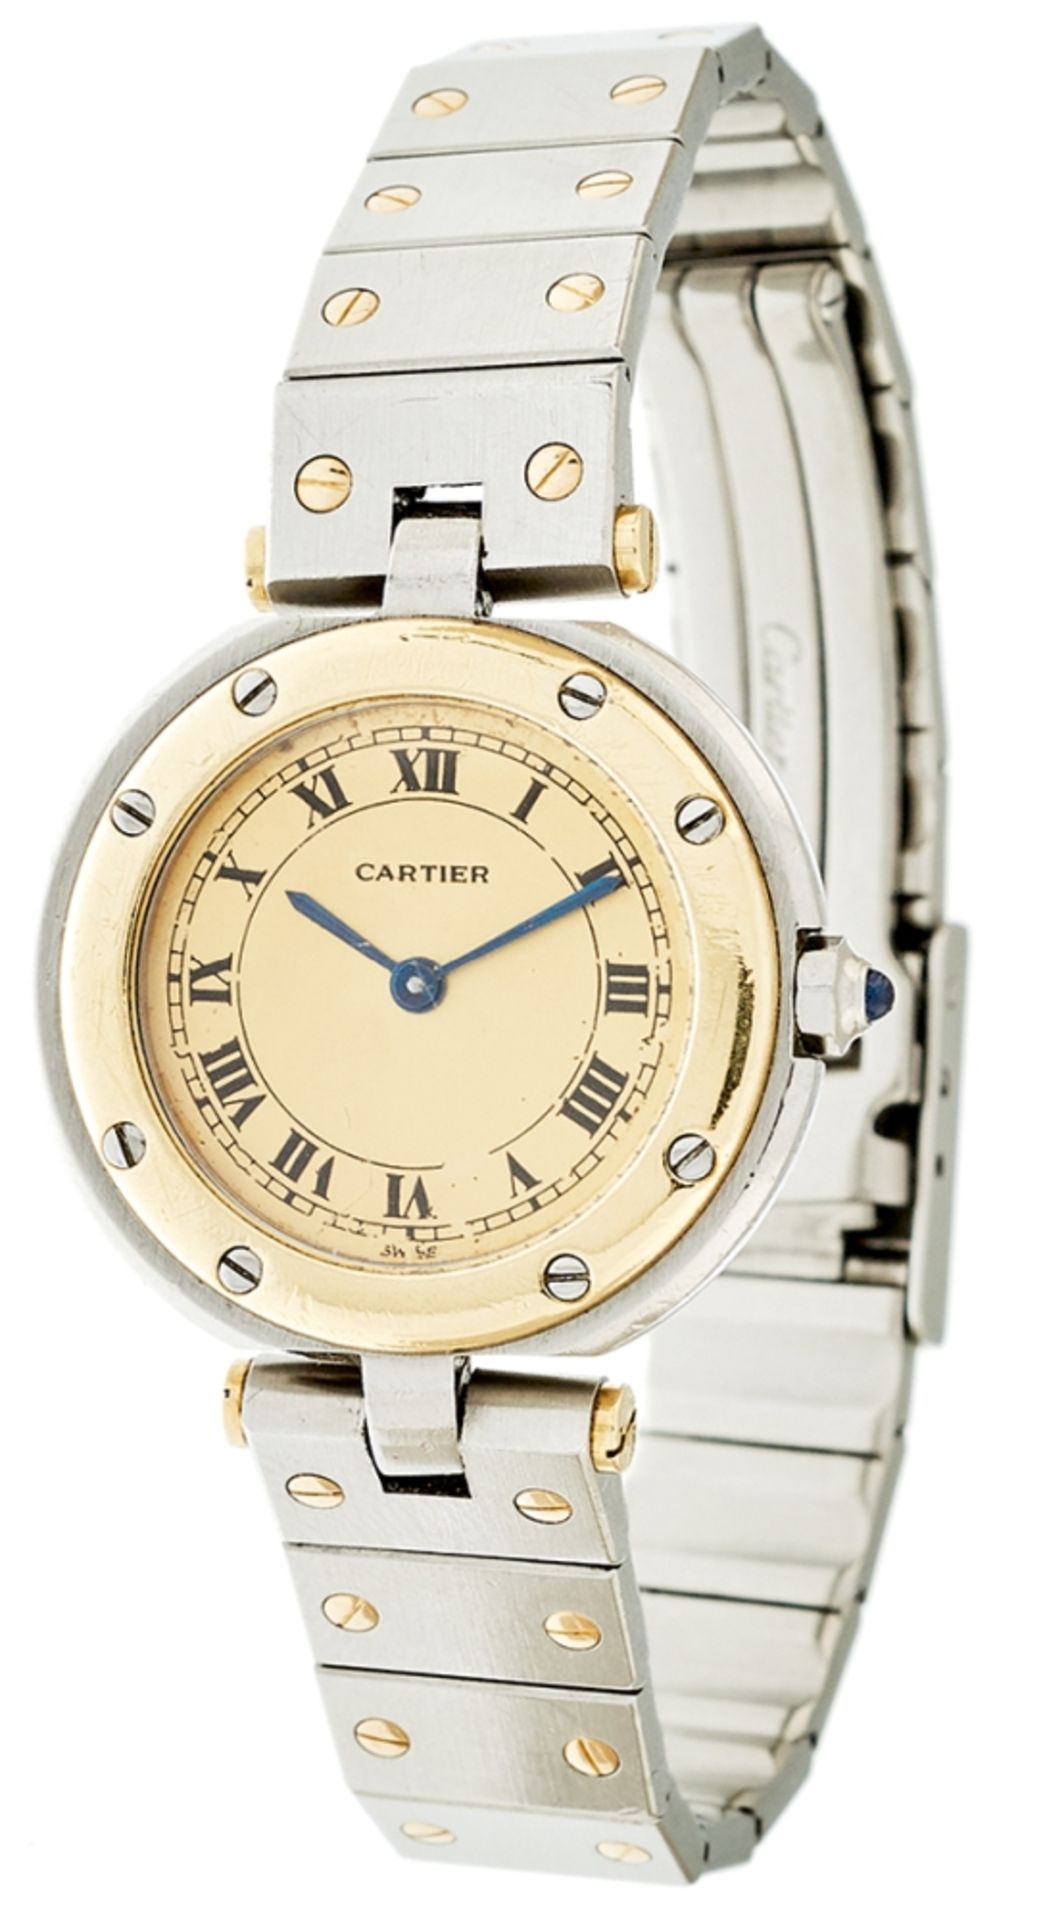 Santos de Cartier Damen Armbanduhr. Ca. 26mm, Gold und Edelstahl, Quarz, Ref.-Nr.: 8191325756. Golde